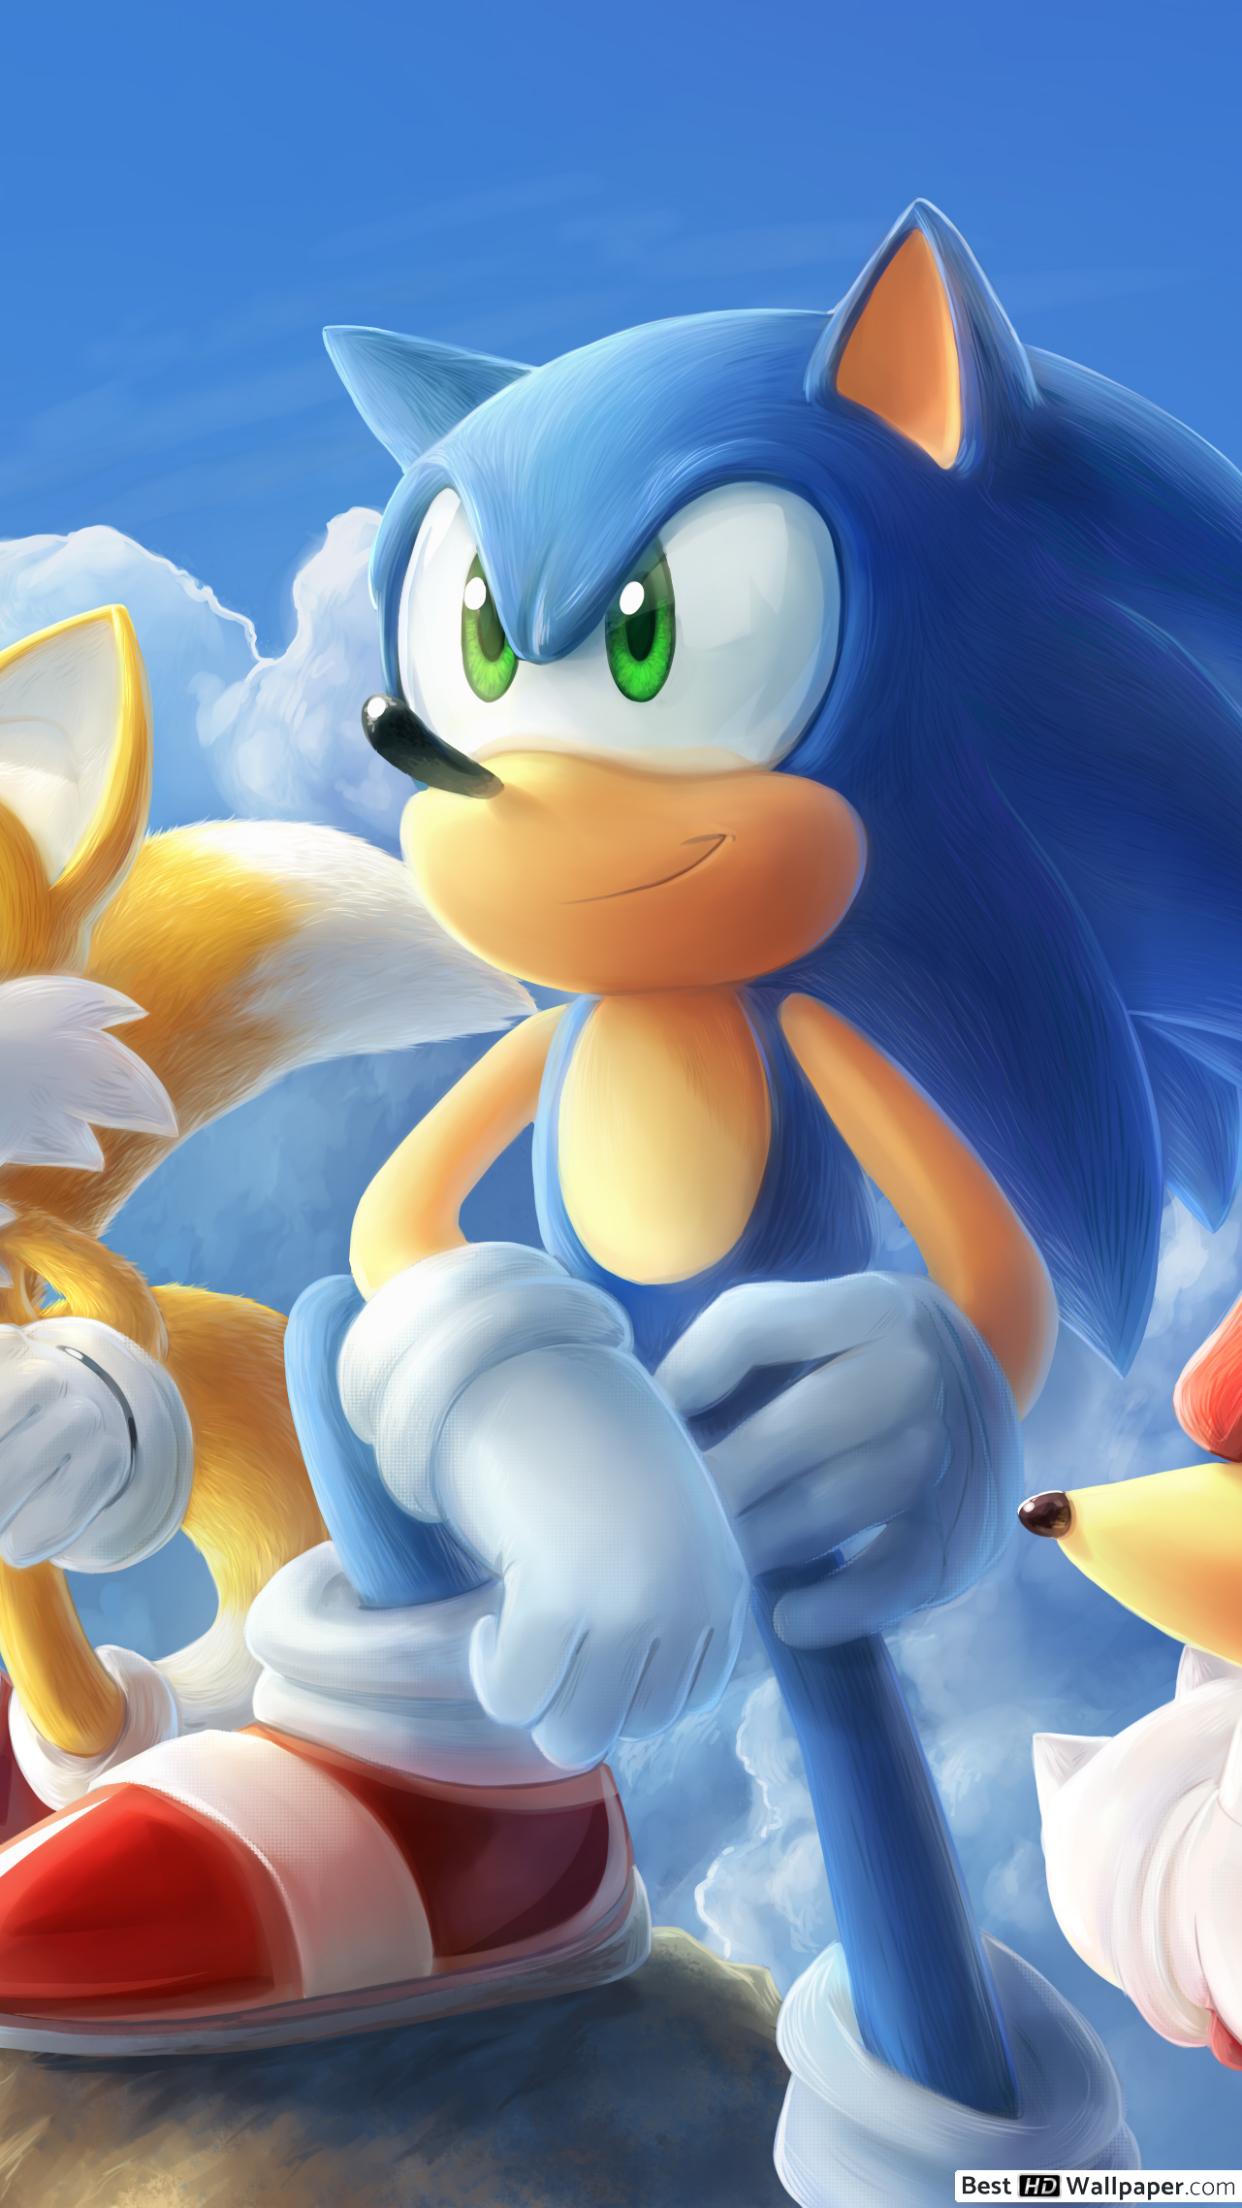 Prower Sonic the Hedgehog HD wallpaper download